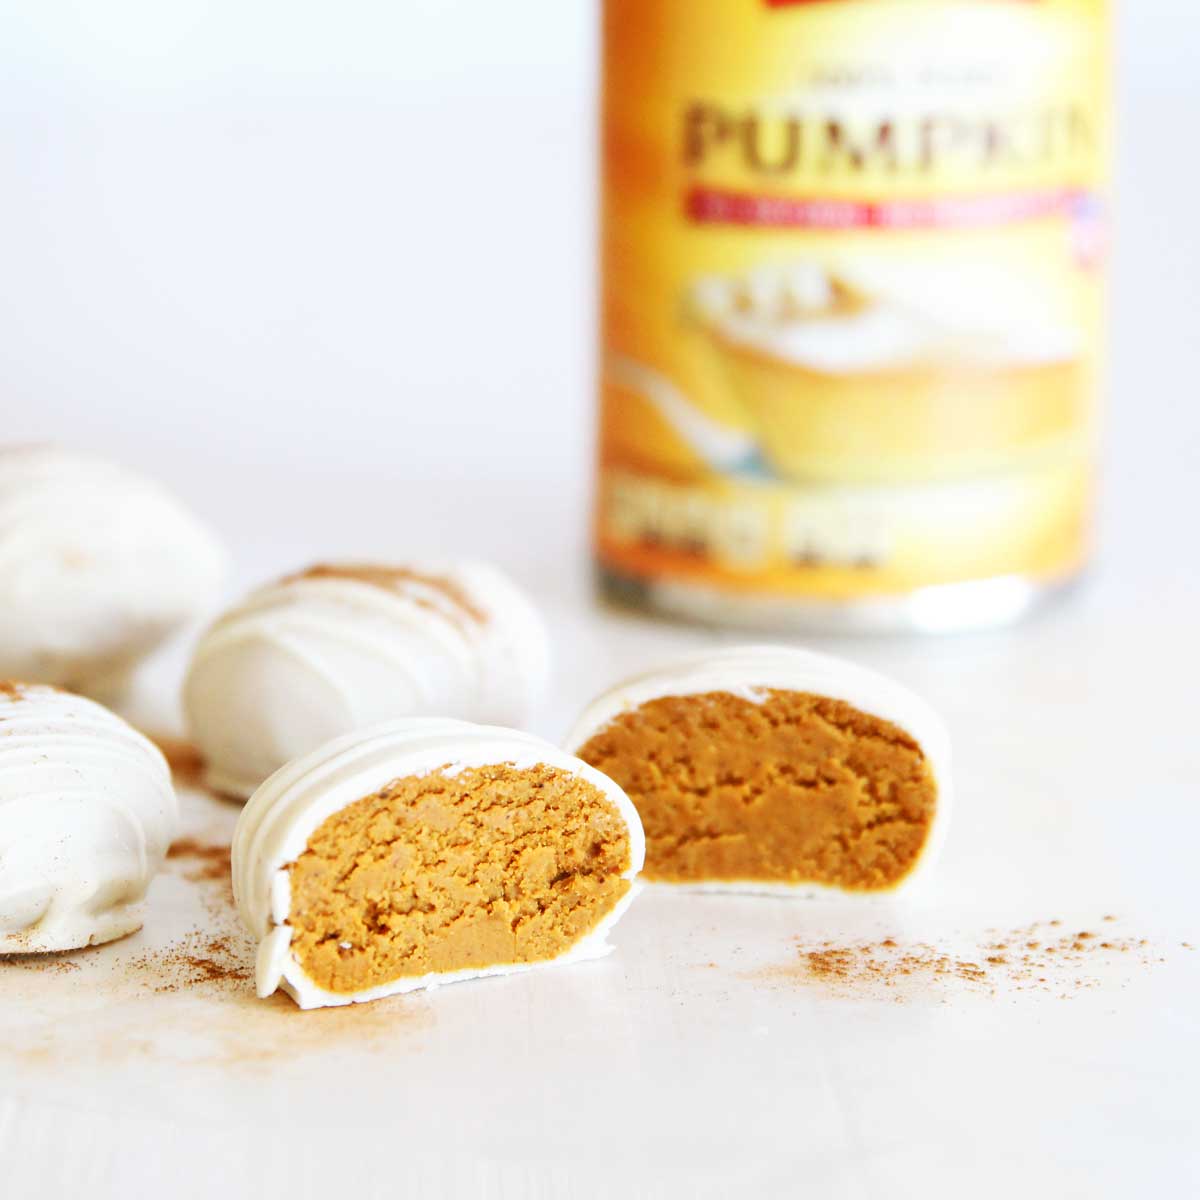 PB Fit Pumpkin Spice White Chocolate Easter Eggs (4-Ingredient Vegan Recipe!) - Sweet Taro Paste